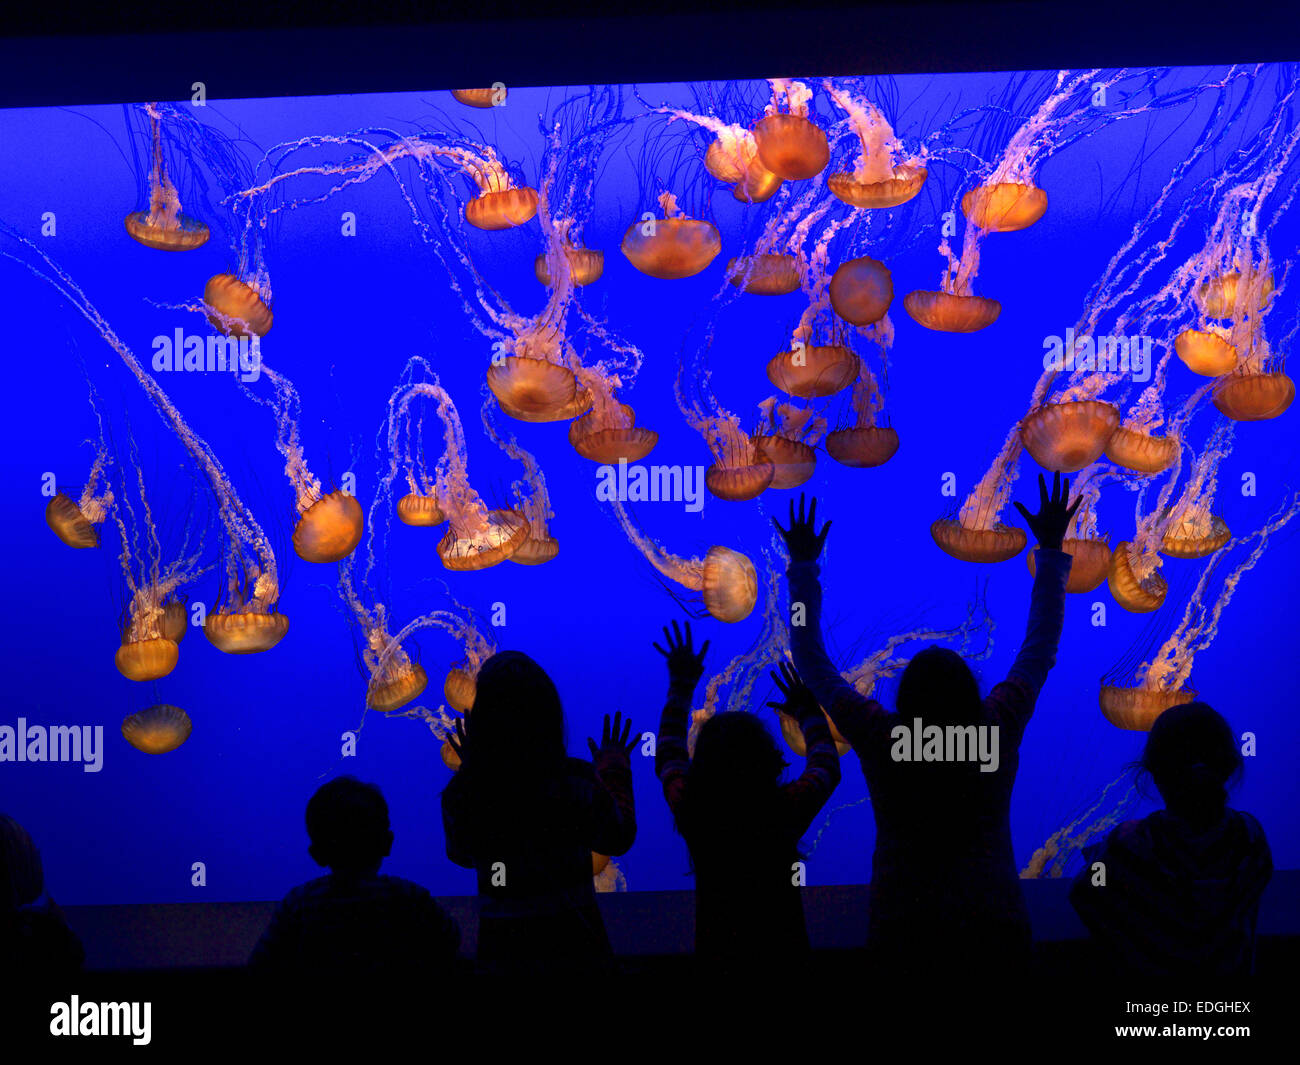 Monterey Aquarium children excited by floating jelly fish attraction in close proximity Monterey Aquarium California USA Stock Photo